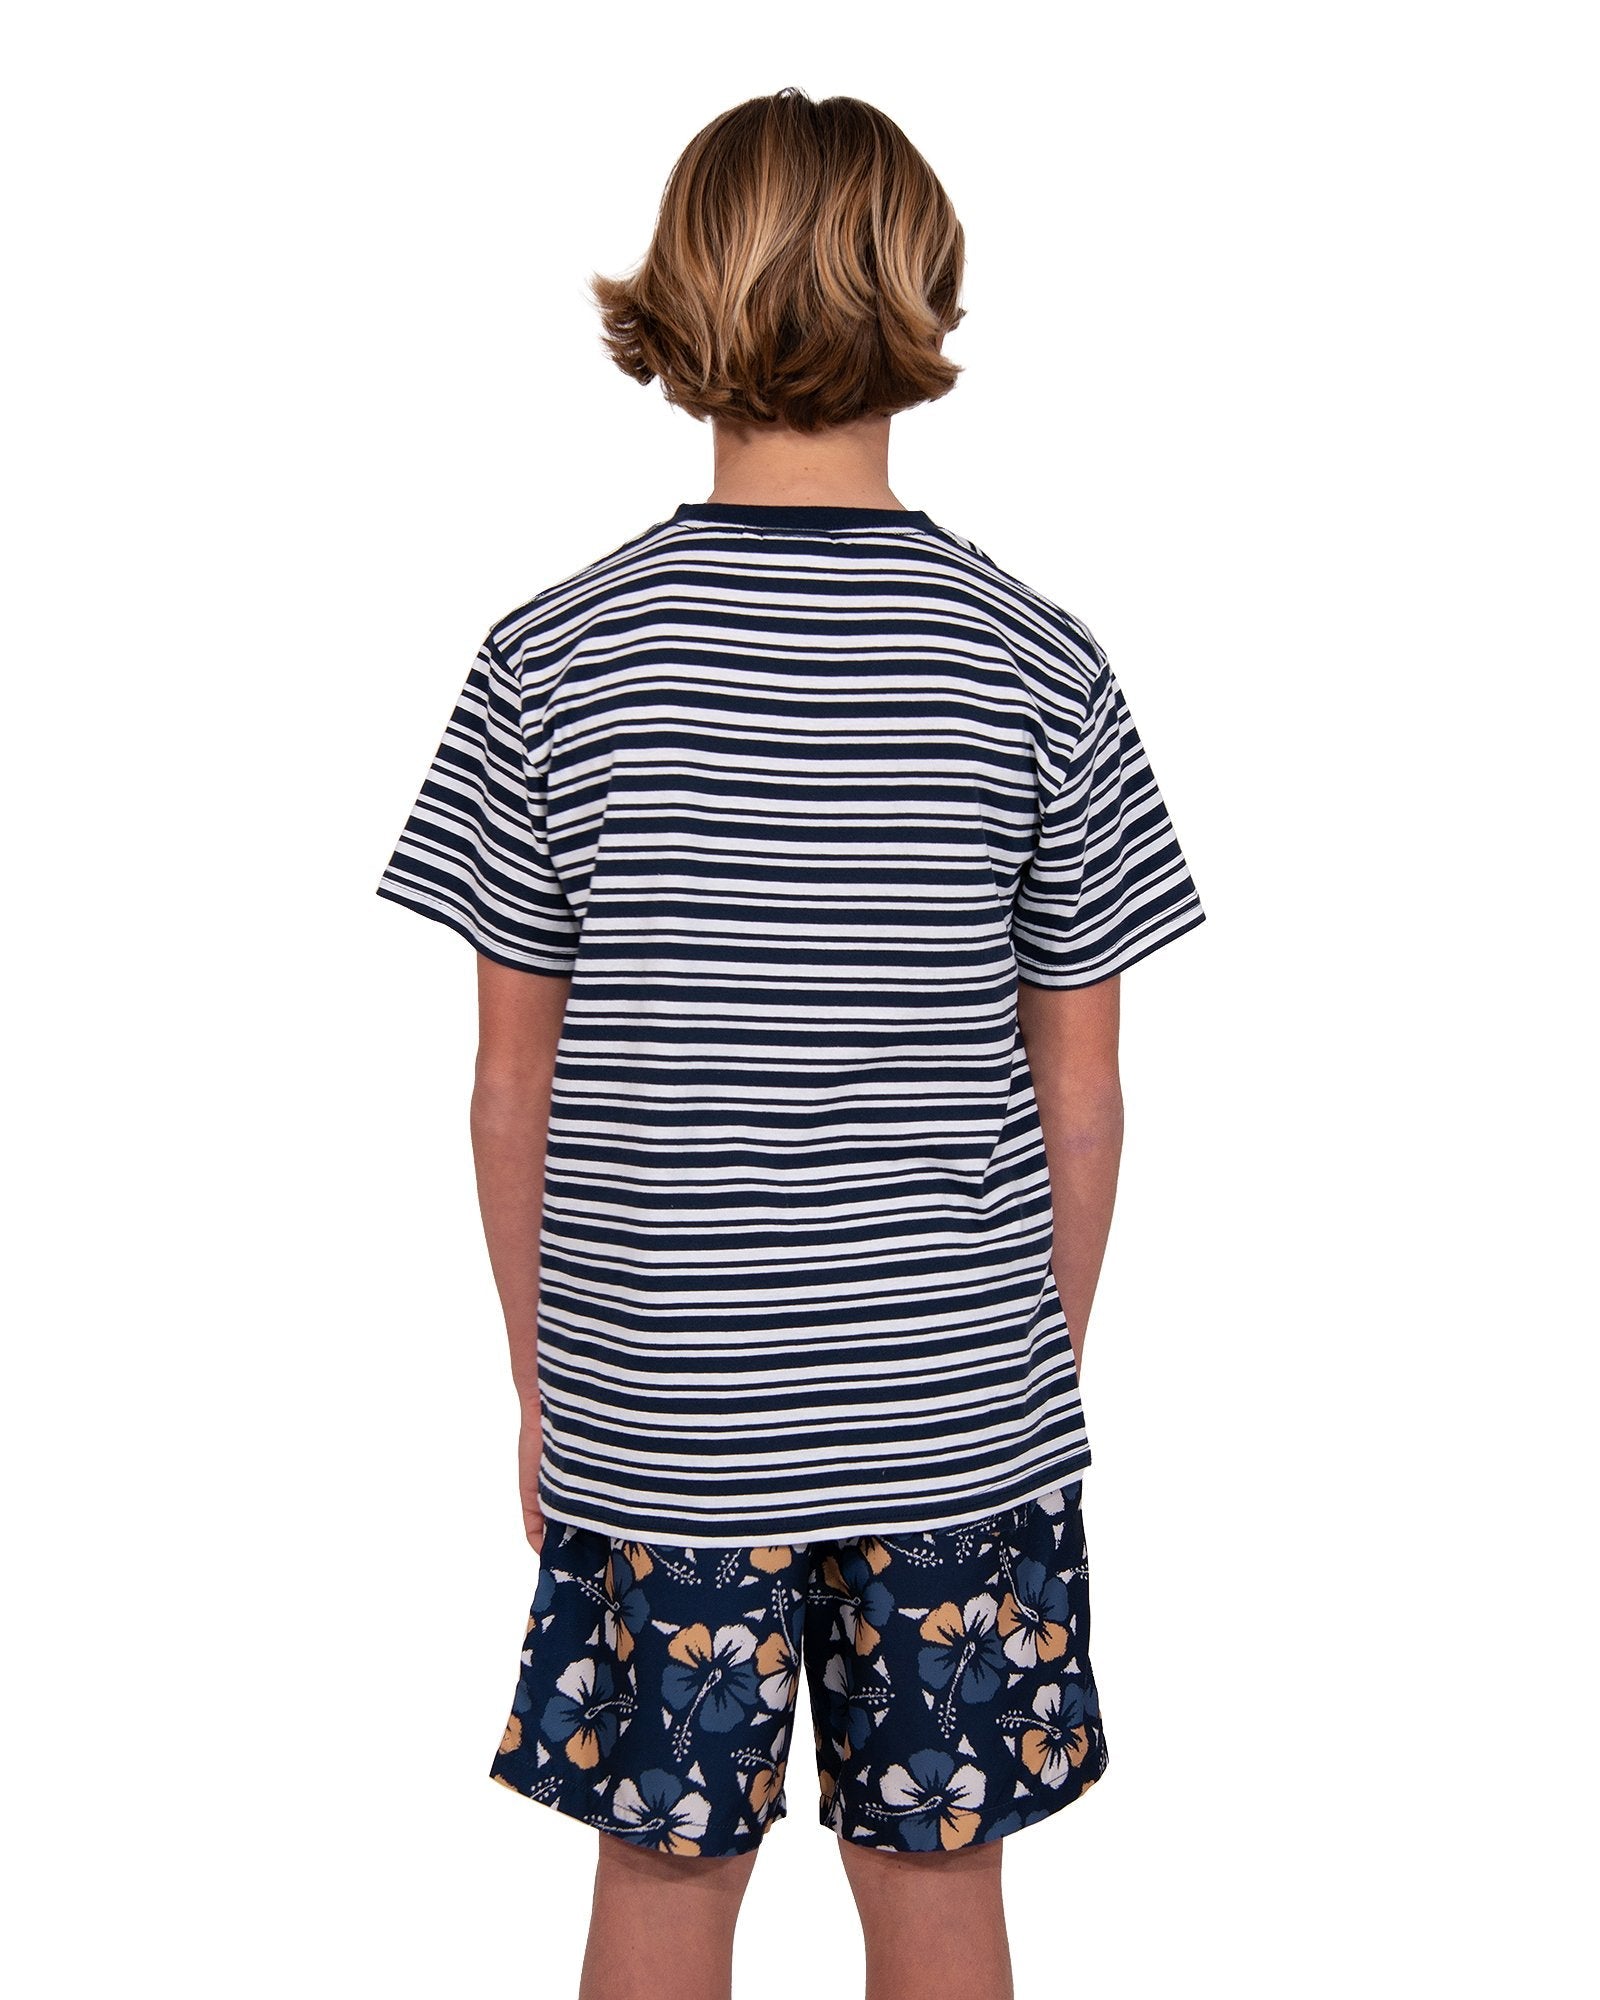 Boys - T-Shirt - Striped Staple Tee - Navy